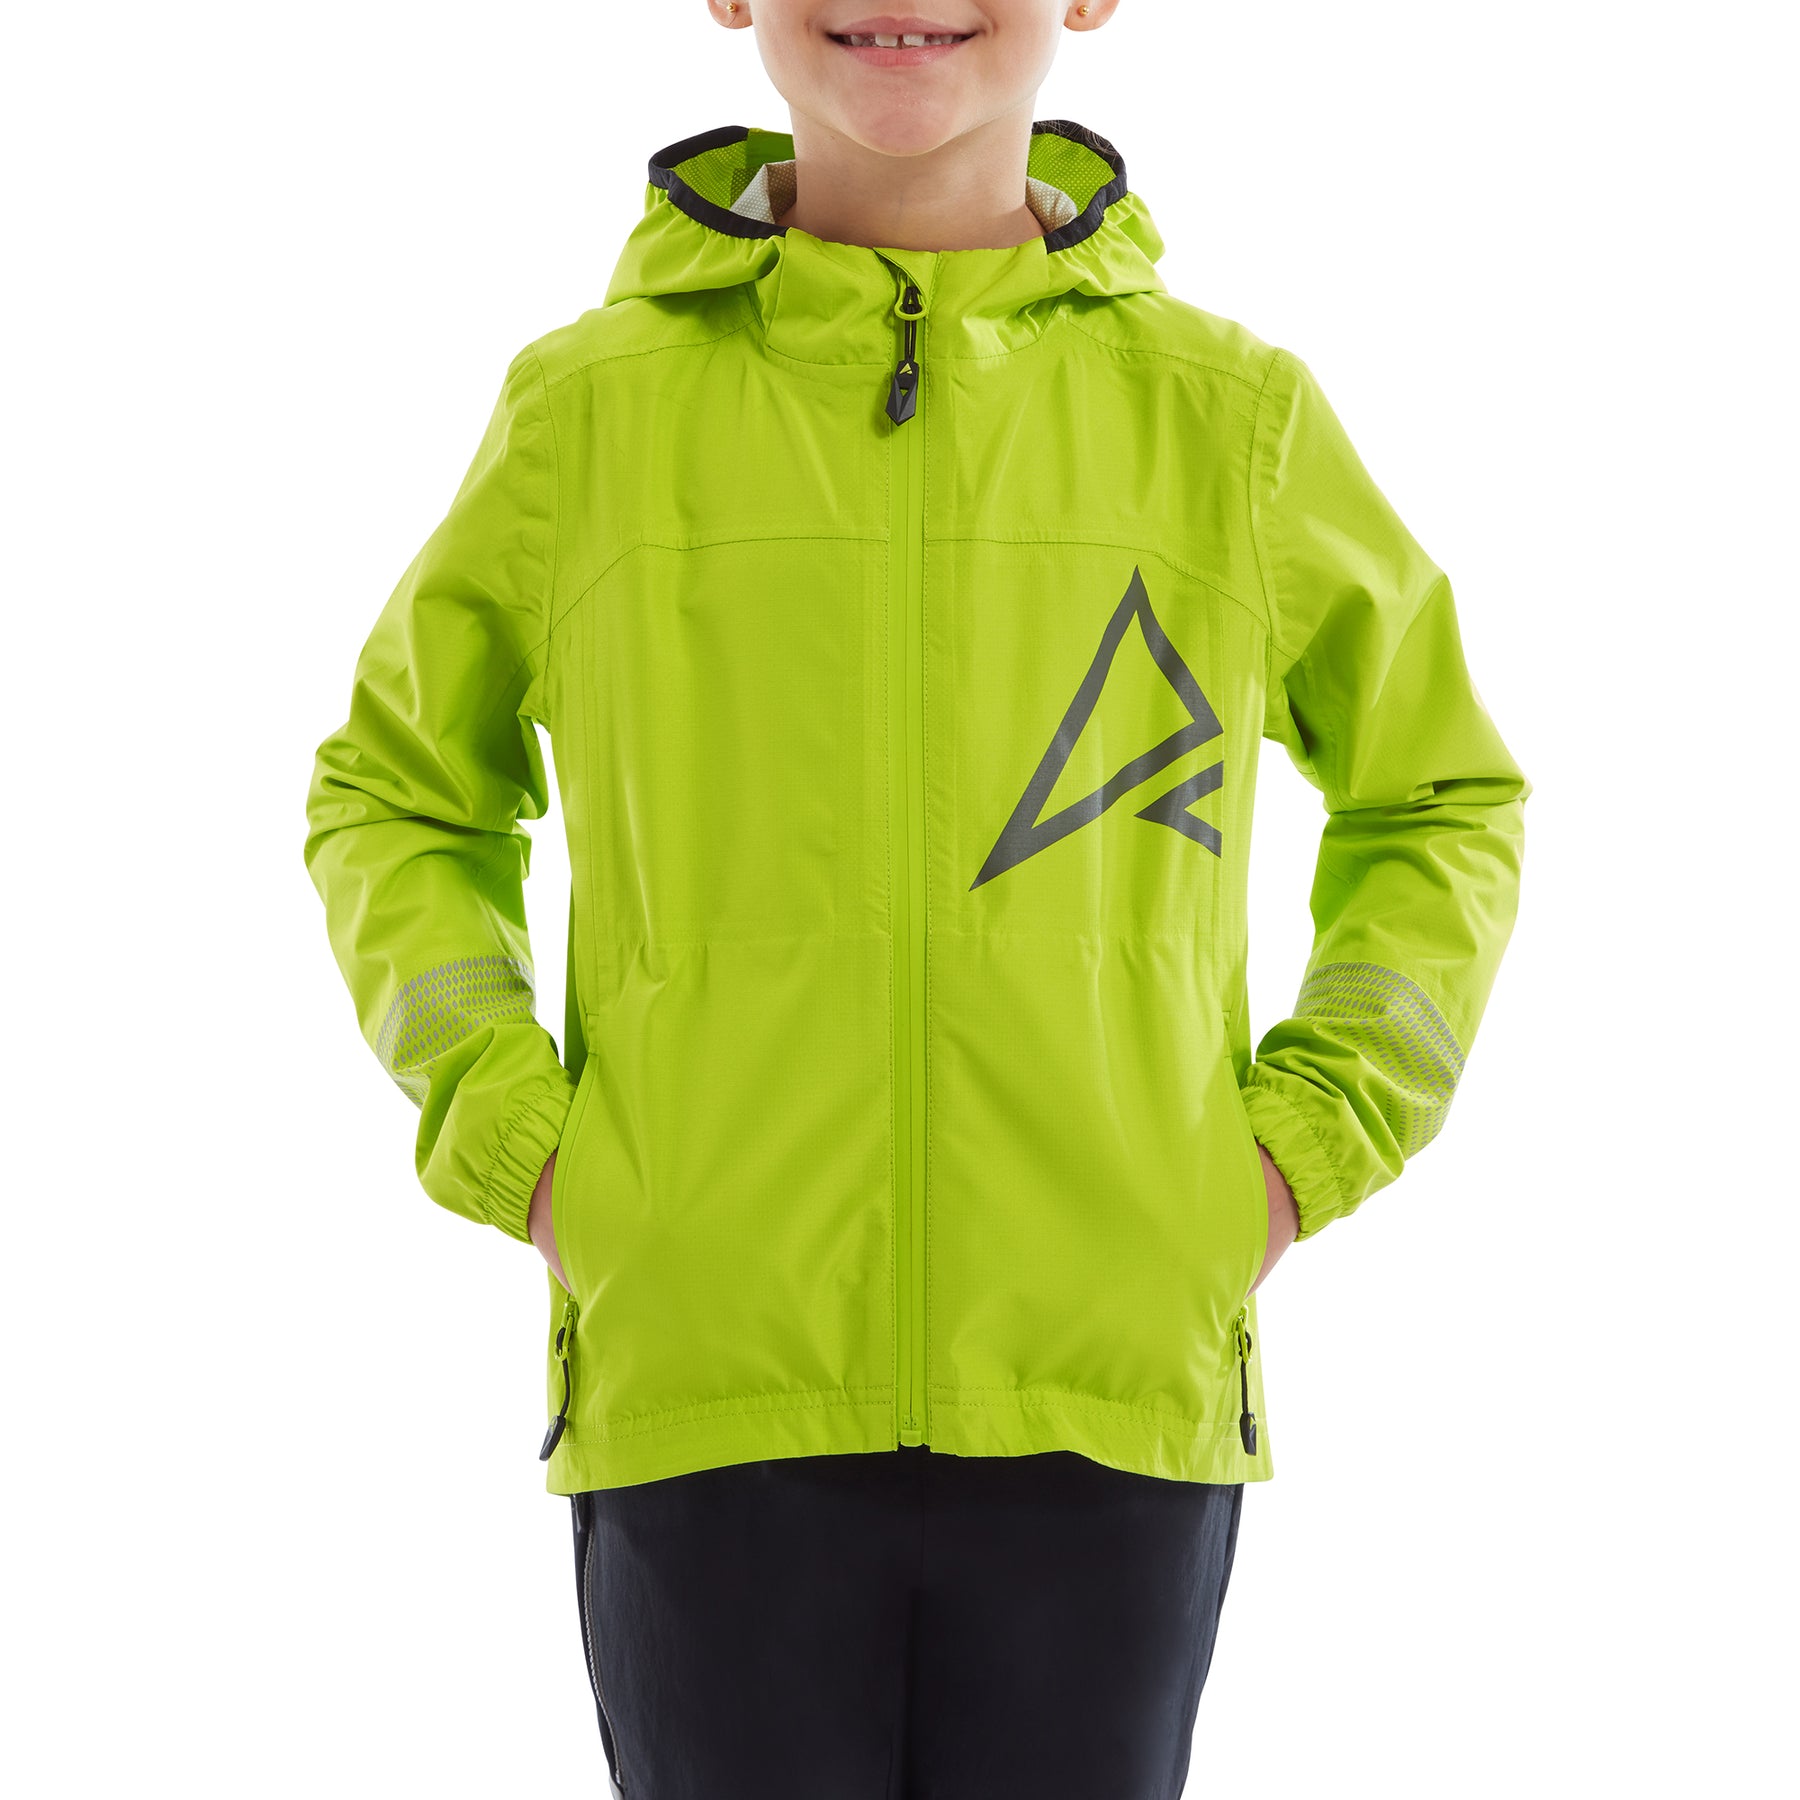 Altura Spark Kid's Jacket Lime 9-10 YEARS